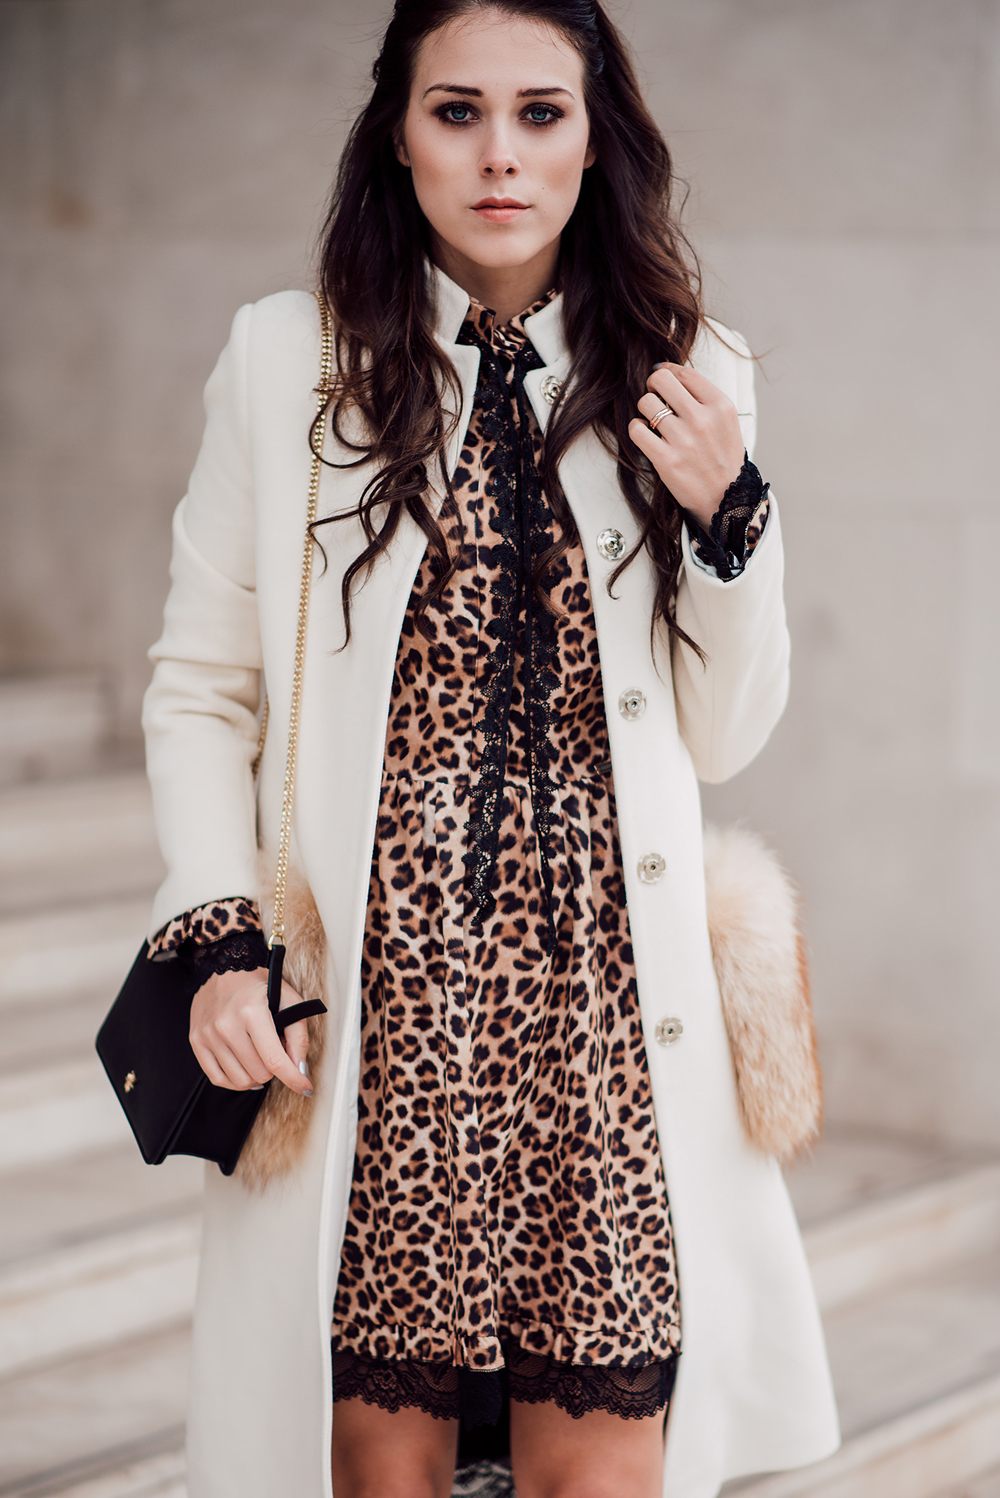 eva-ahacevcic_love-eva_terminal3_ootd_leopard-print_dress_fashion-blogger-1